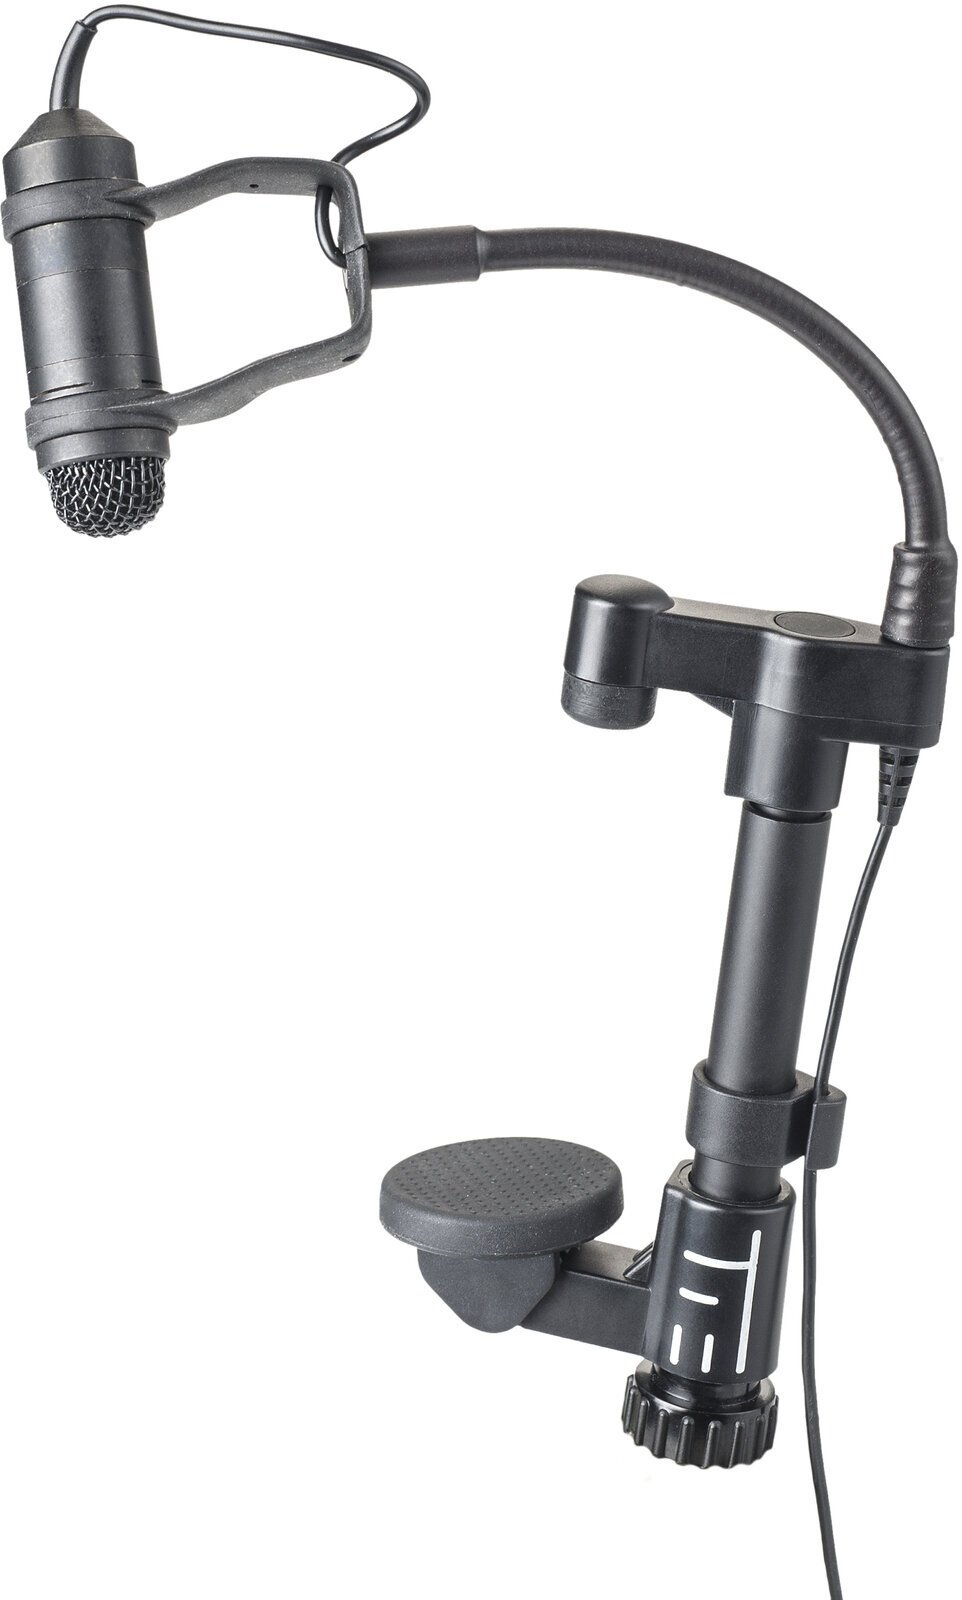 Instrument Condenser Microphone TIE TCX110 Condenser Instrument Microphone for Guitar (B-Stock) #951772 (Just unboxed)